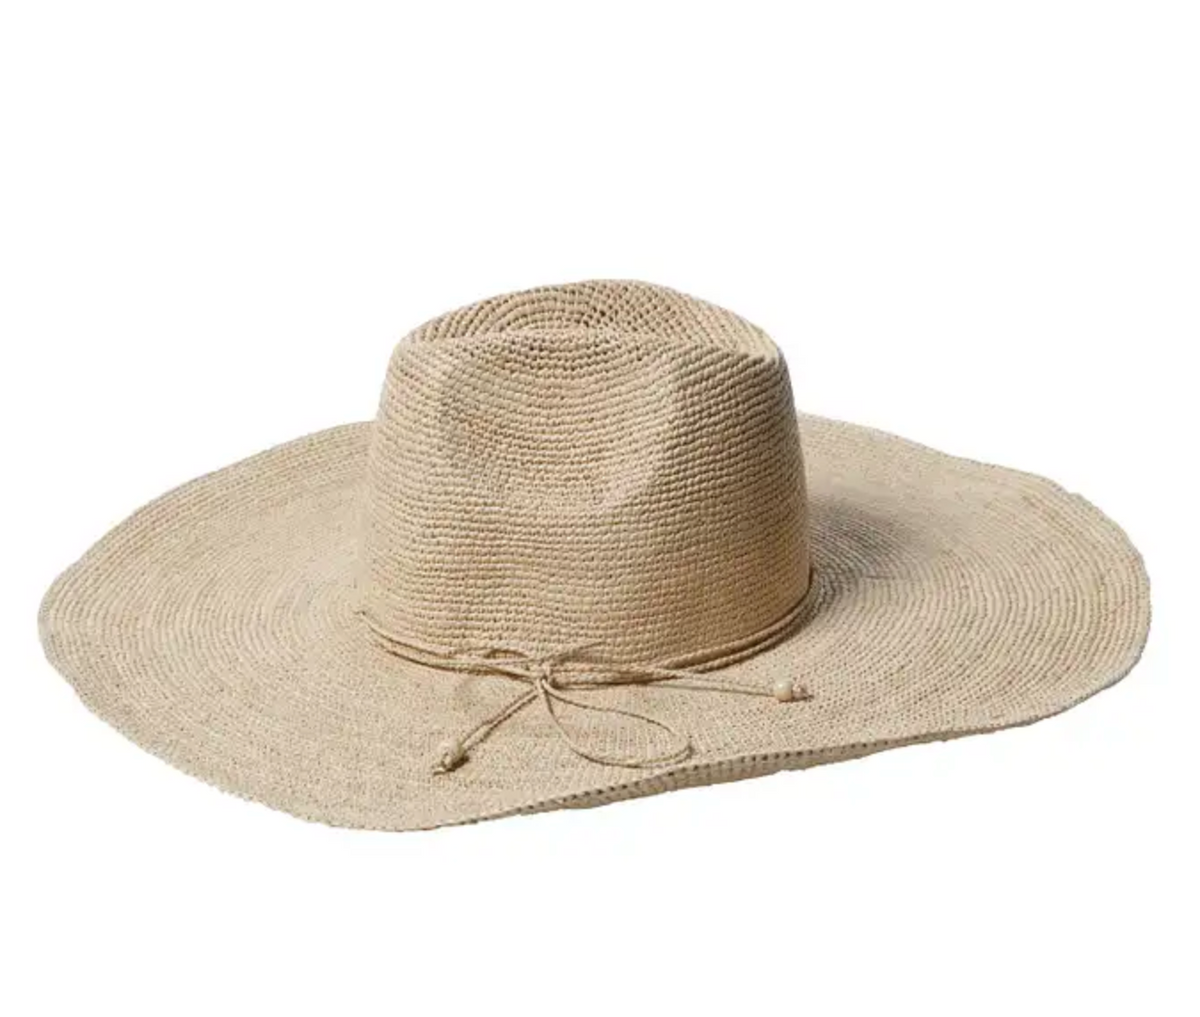 Western Sun Hat - Natural